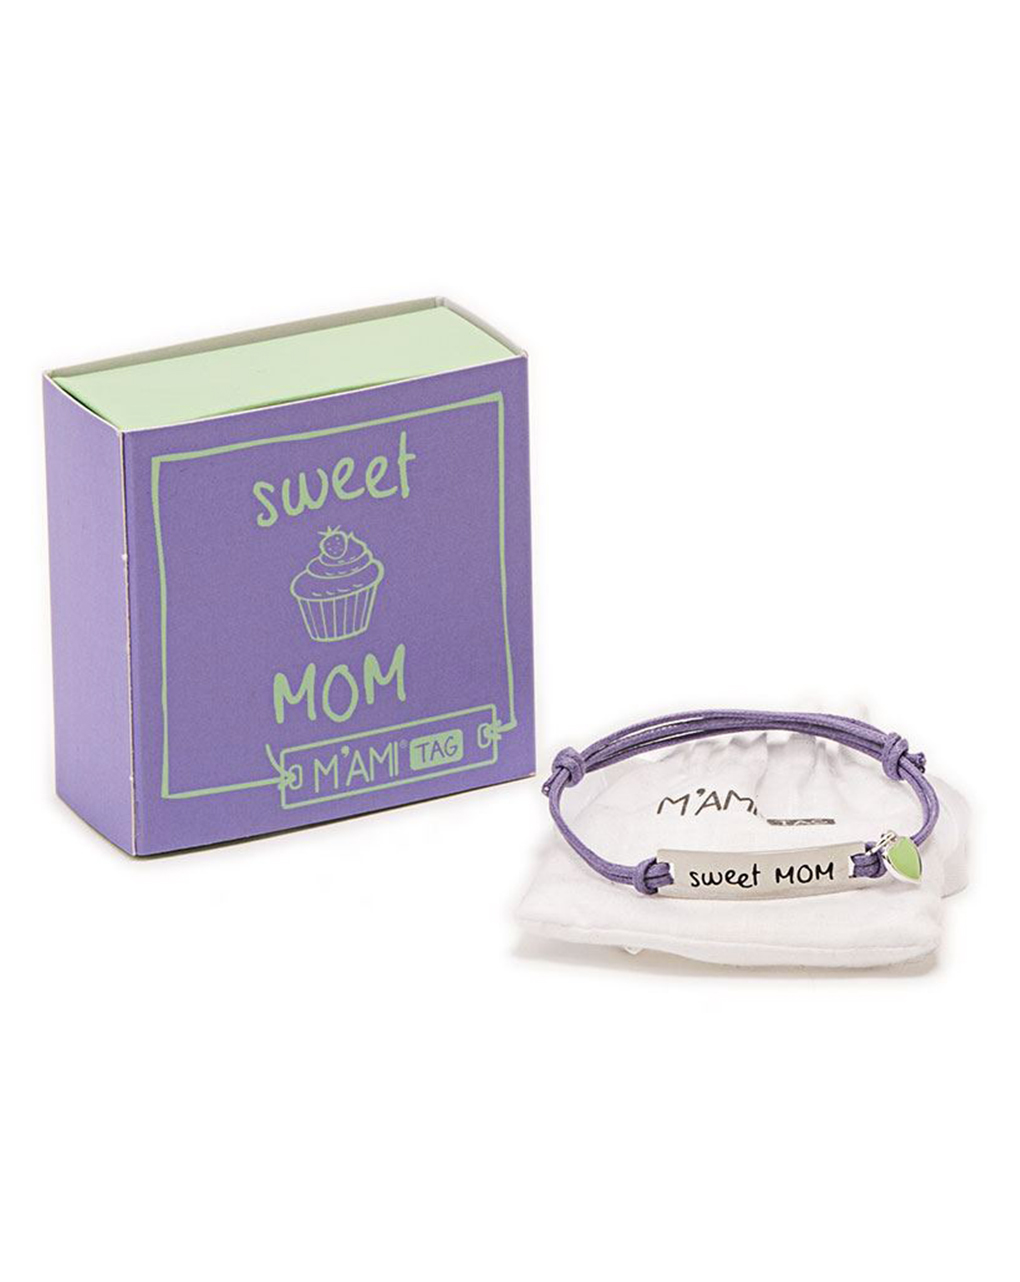 M’ami® tag sweet mom